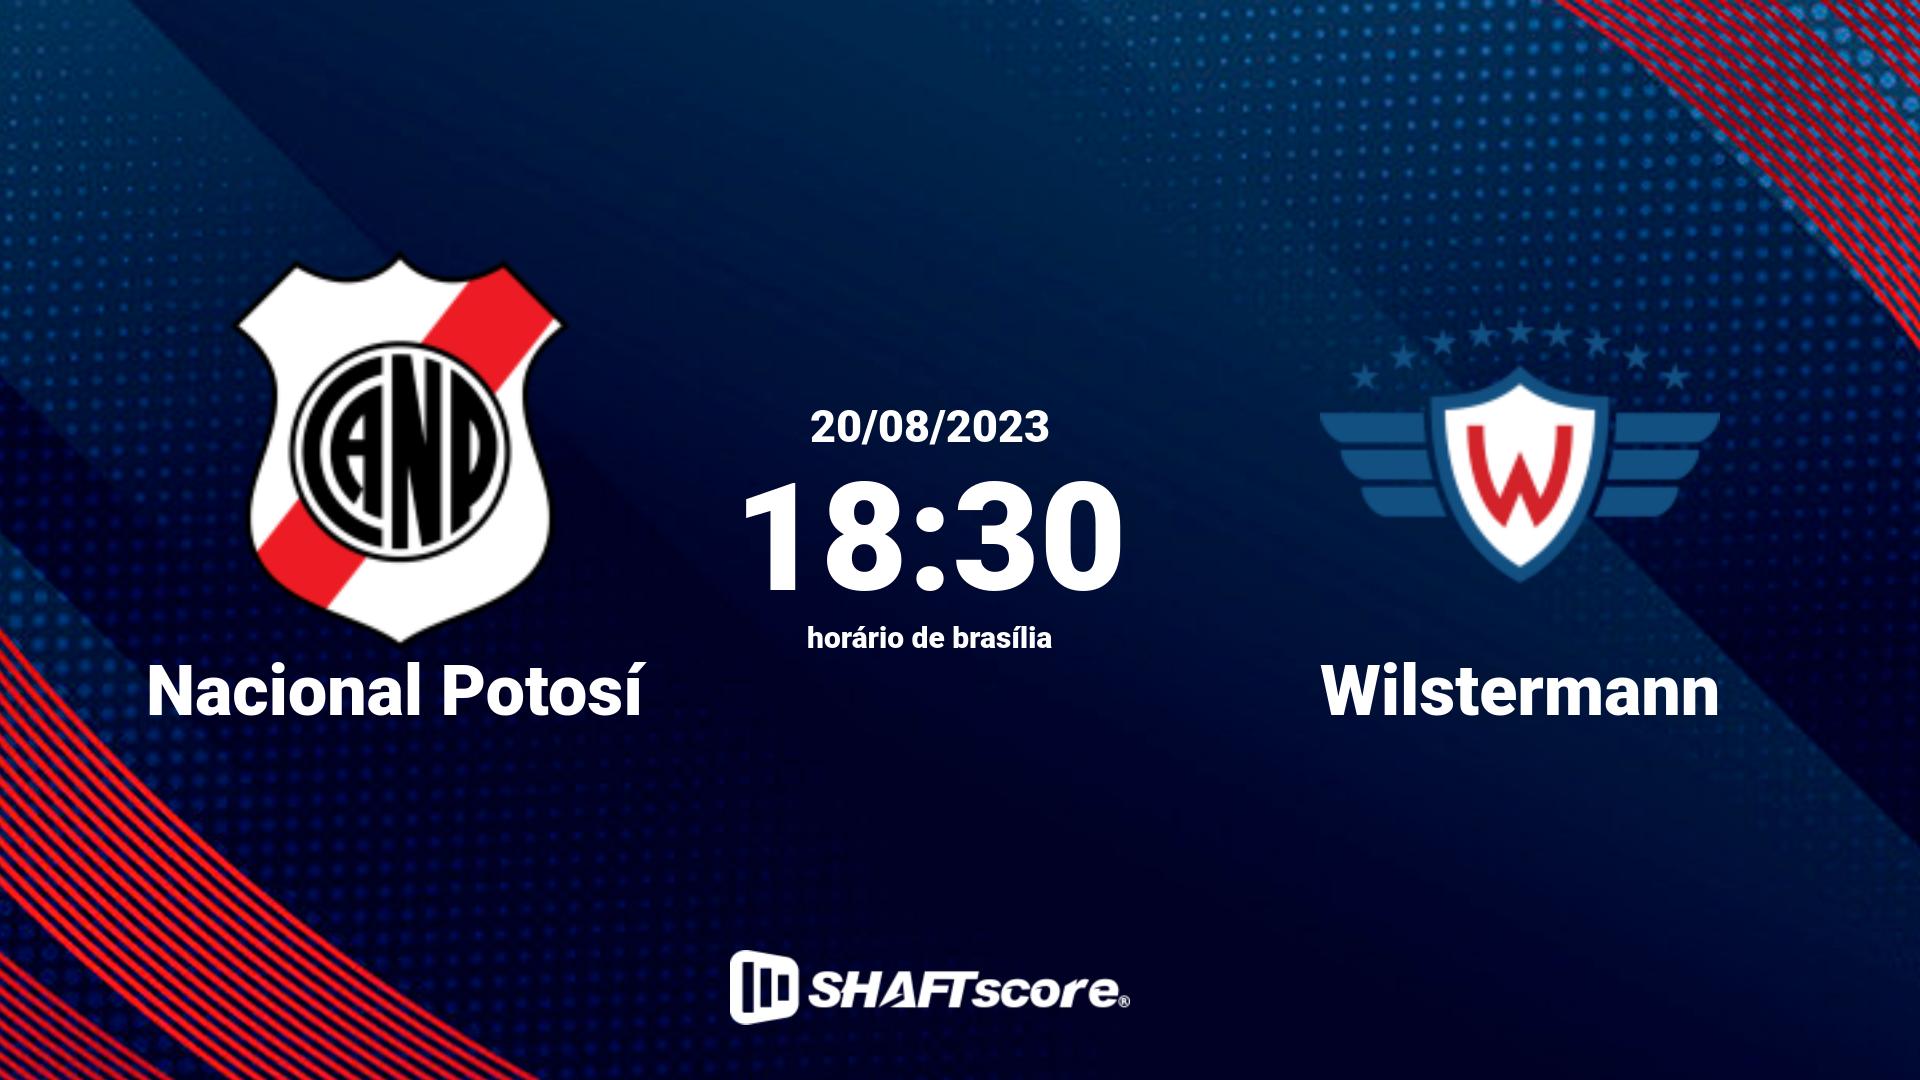 Estatísticas do jogo Nacional Potosí vs Wilstermann 20.08 18:30